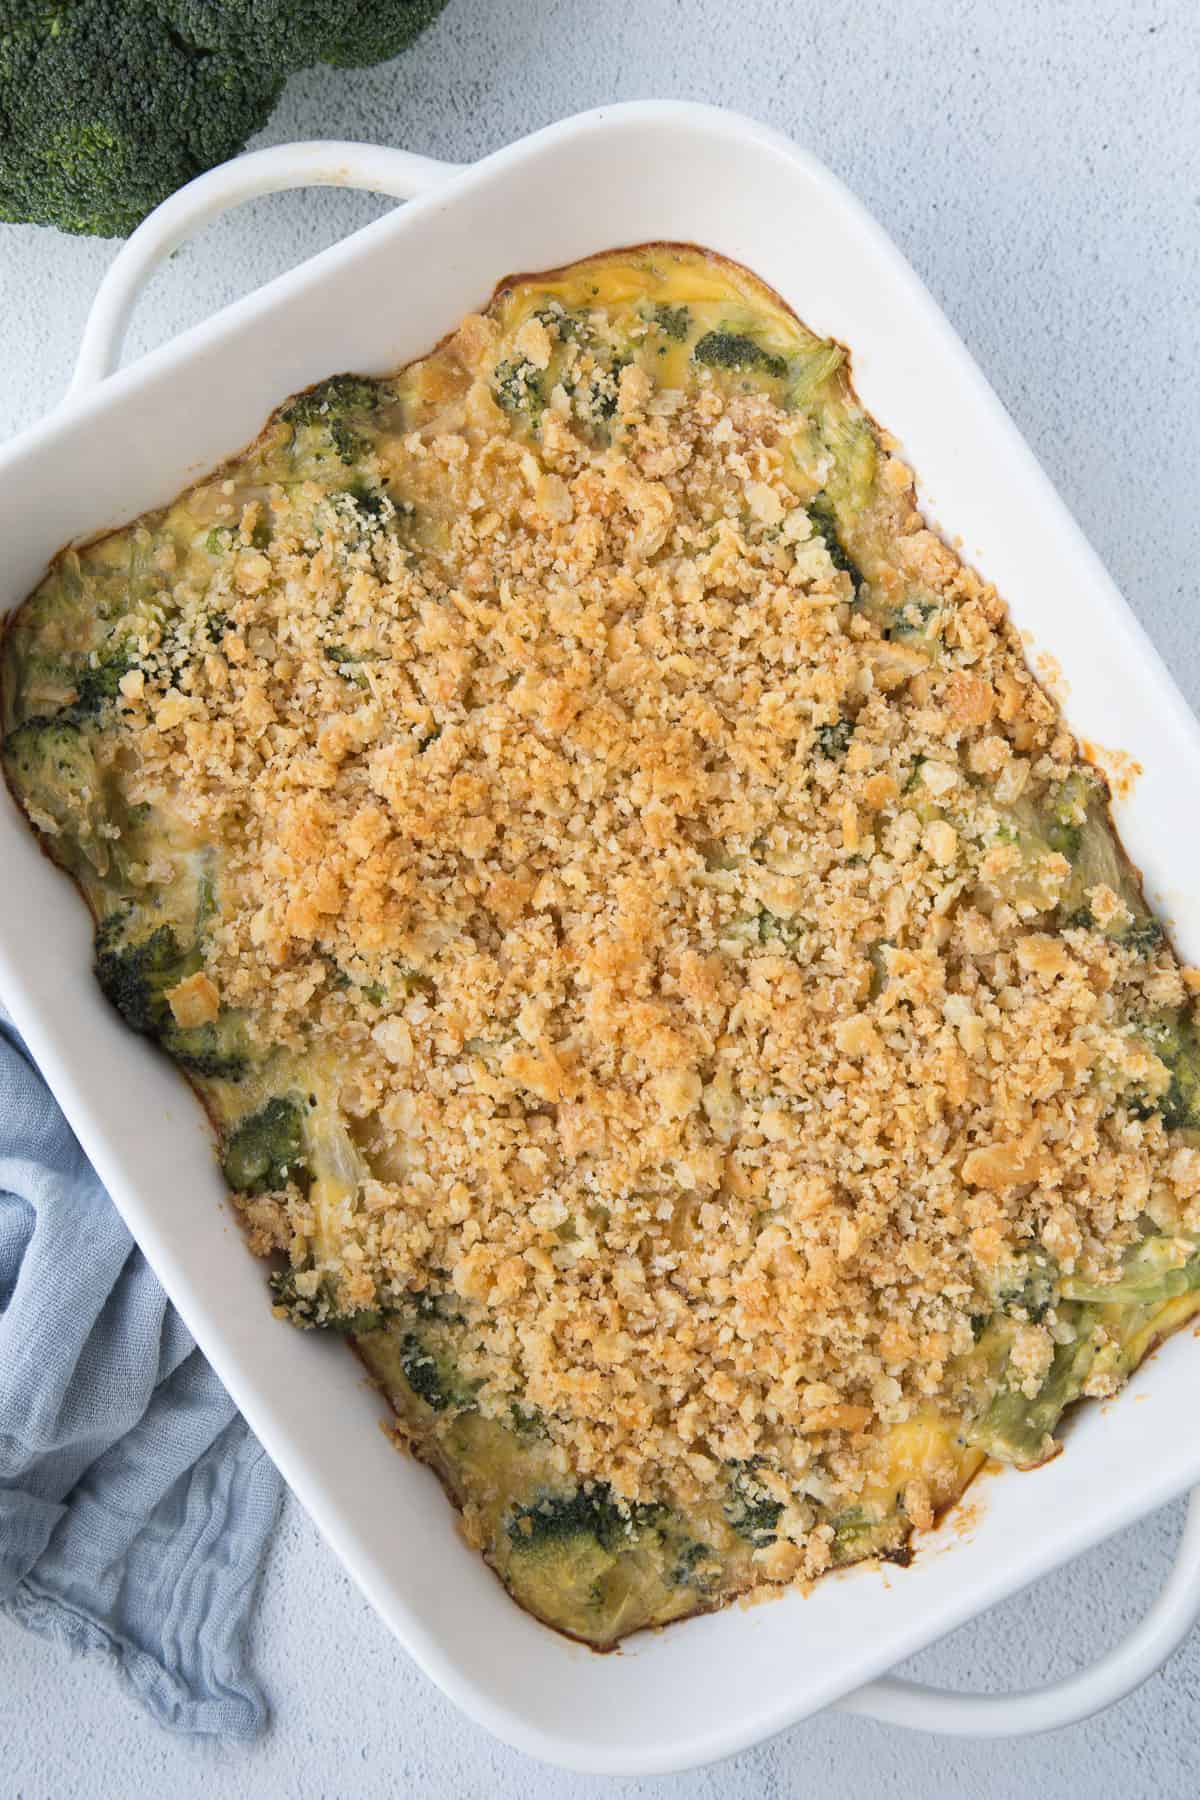 velveeta broccoli casserole topped with ritz cracker crumbs in a white casserole dish.